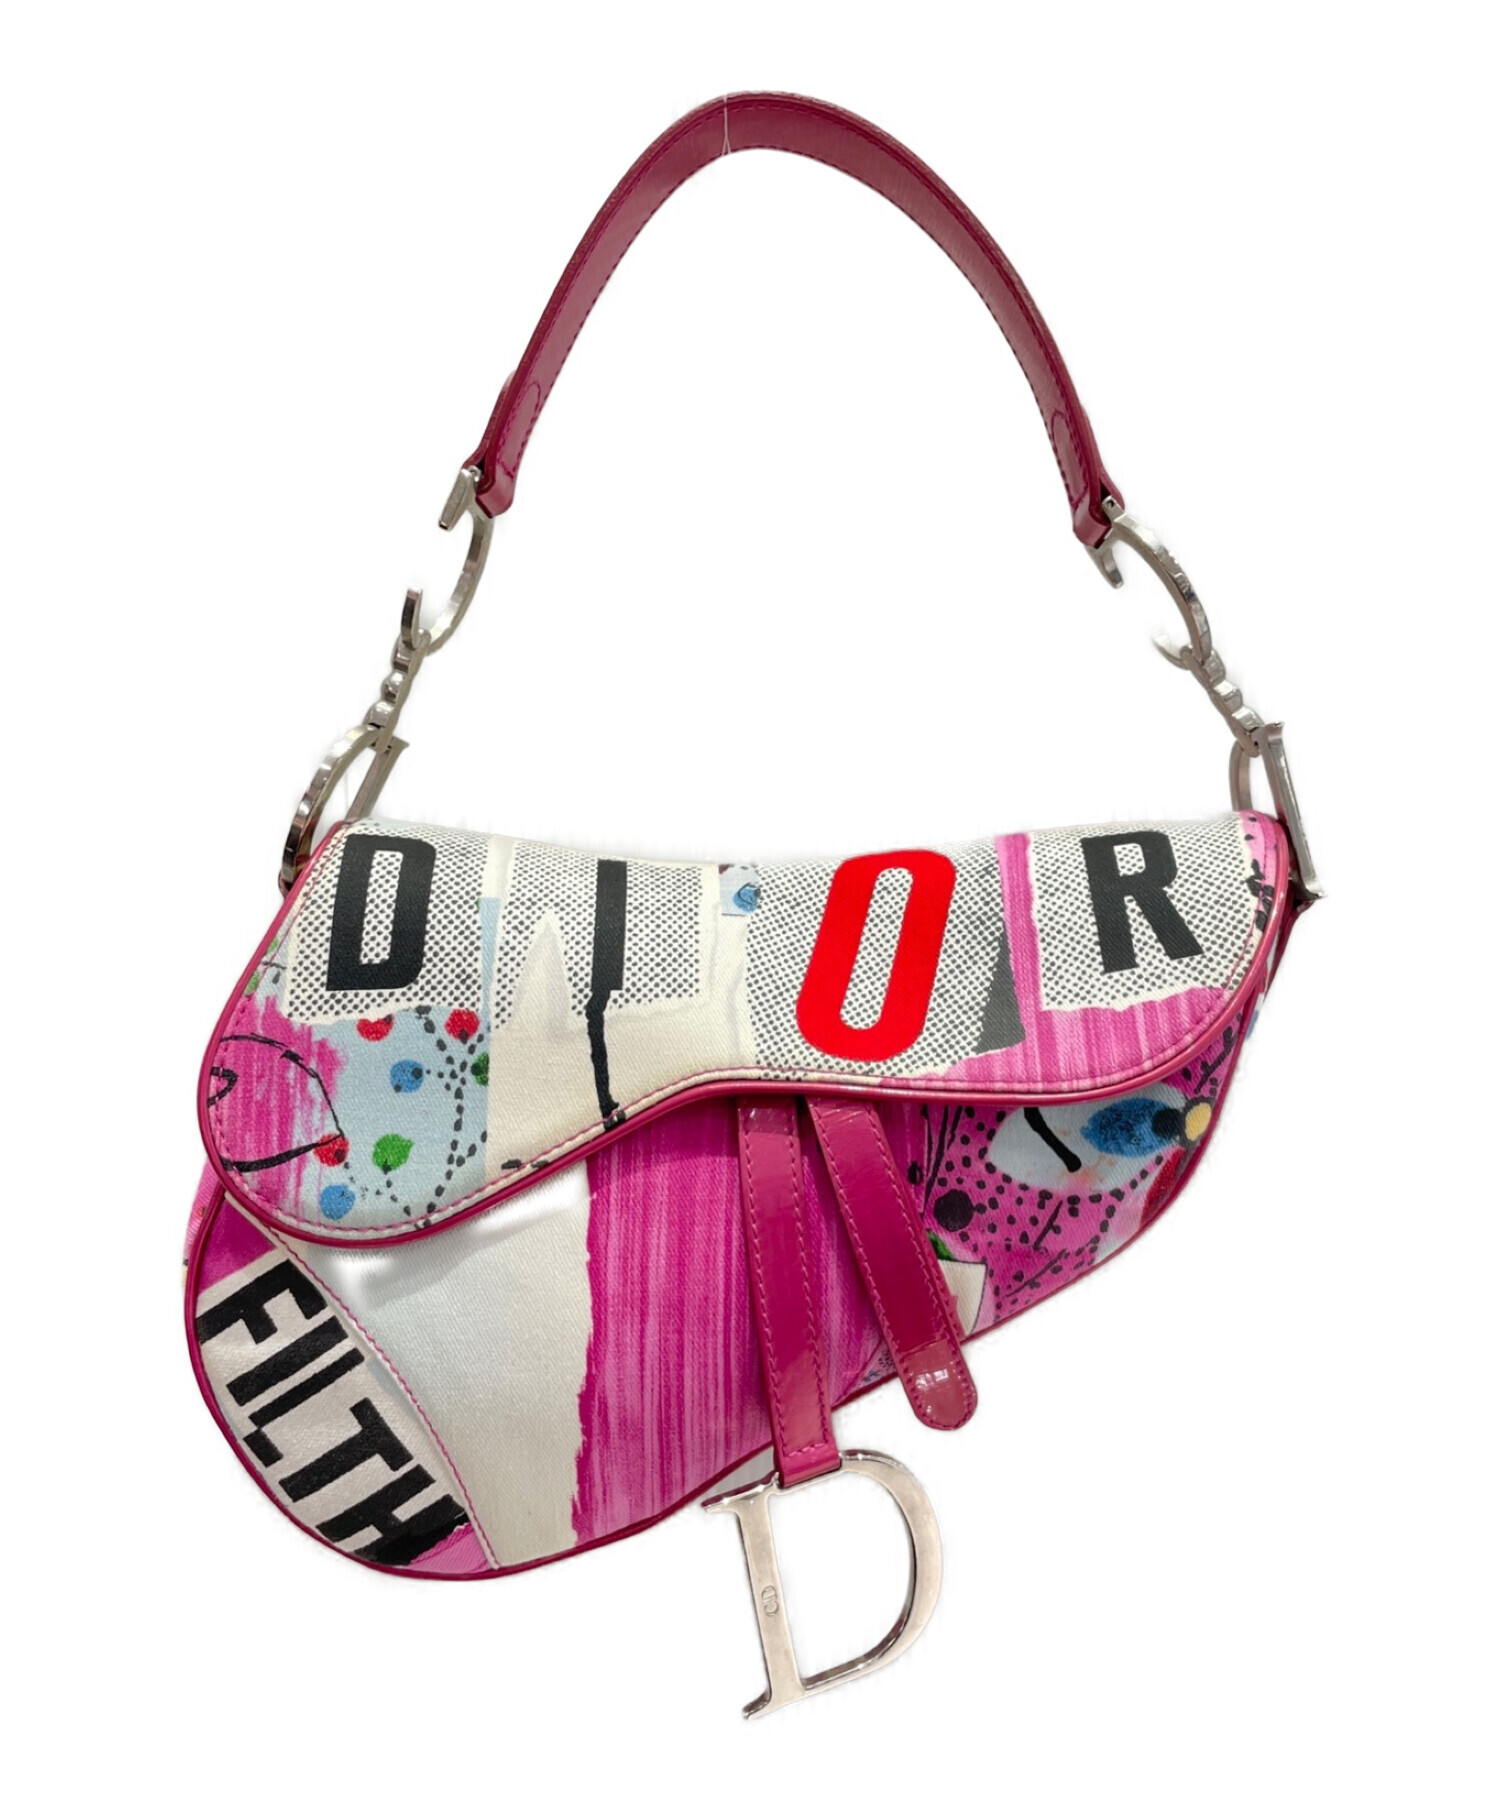 Christian Dior (クリスチャン ディオール) サドルバッグ ピンク×ホワイト